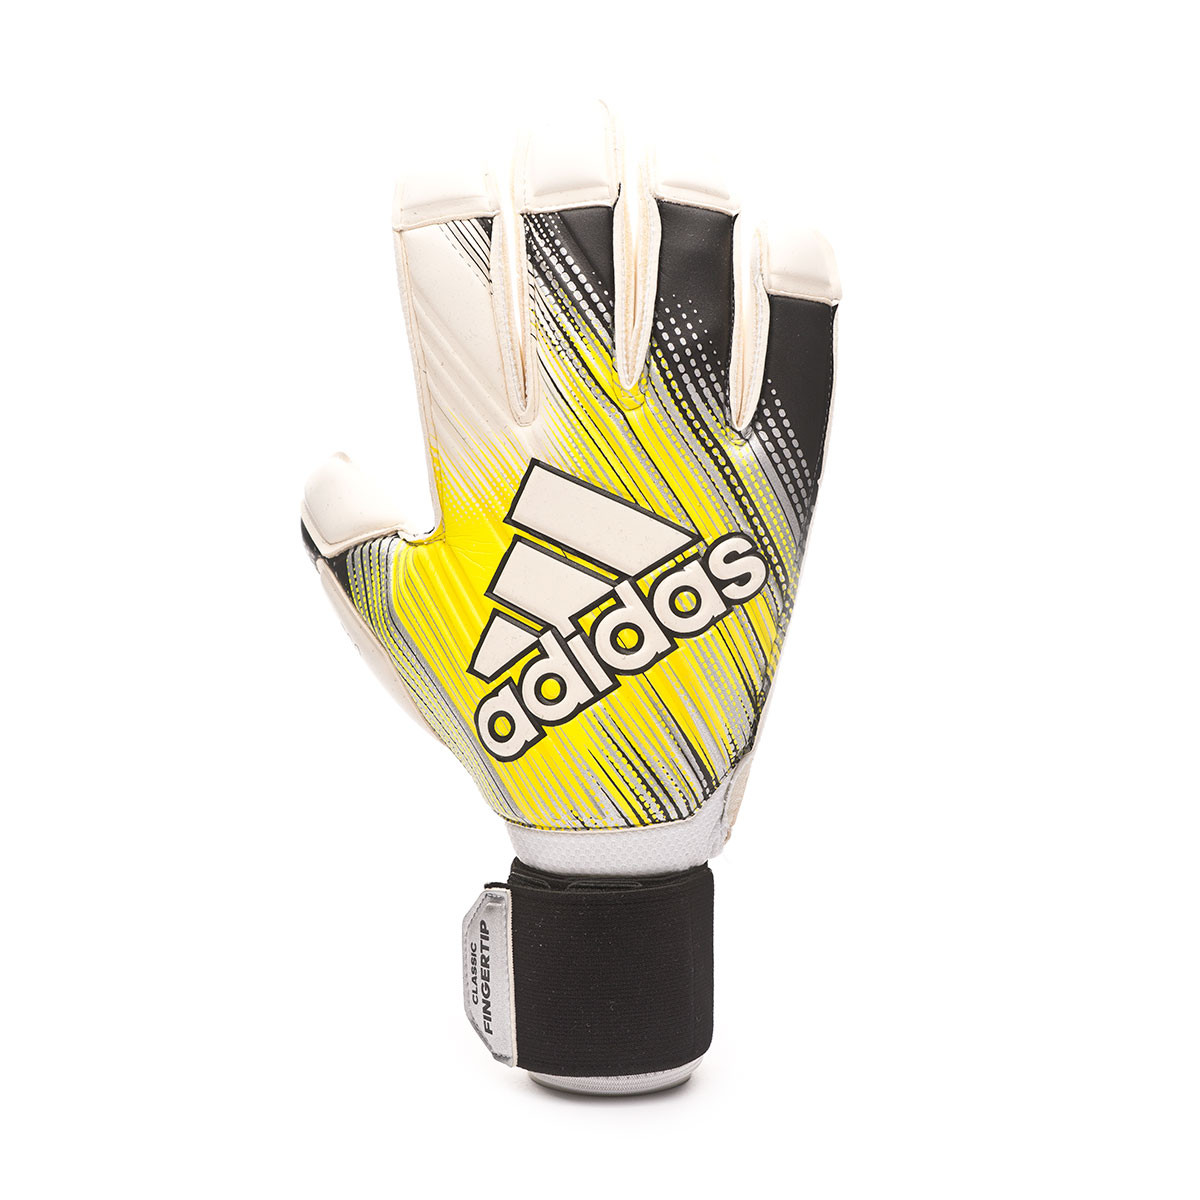 yellow adidas football gloves